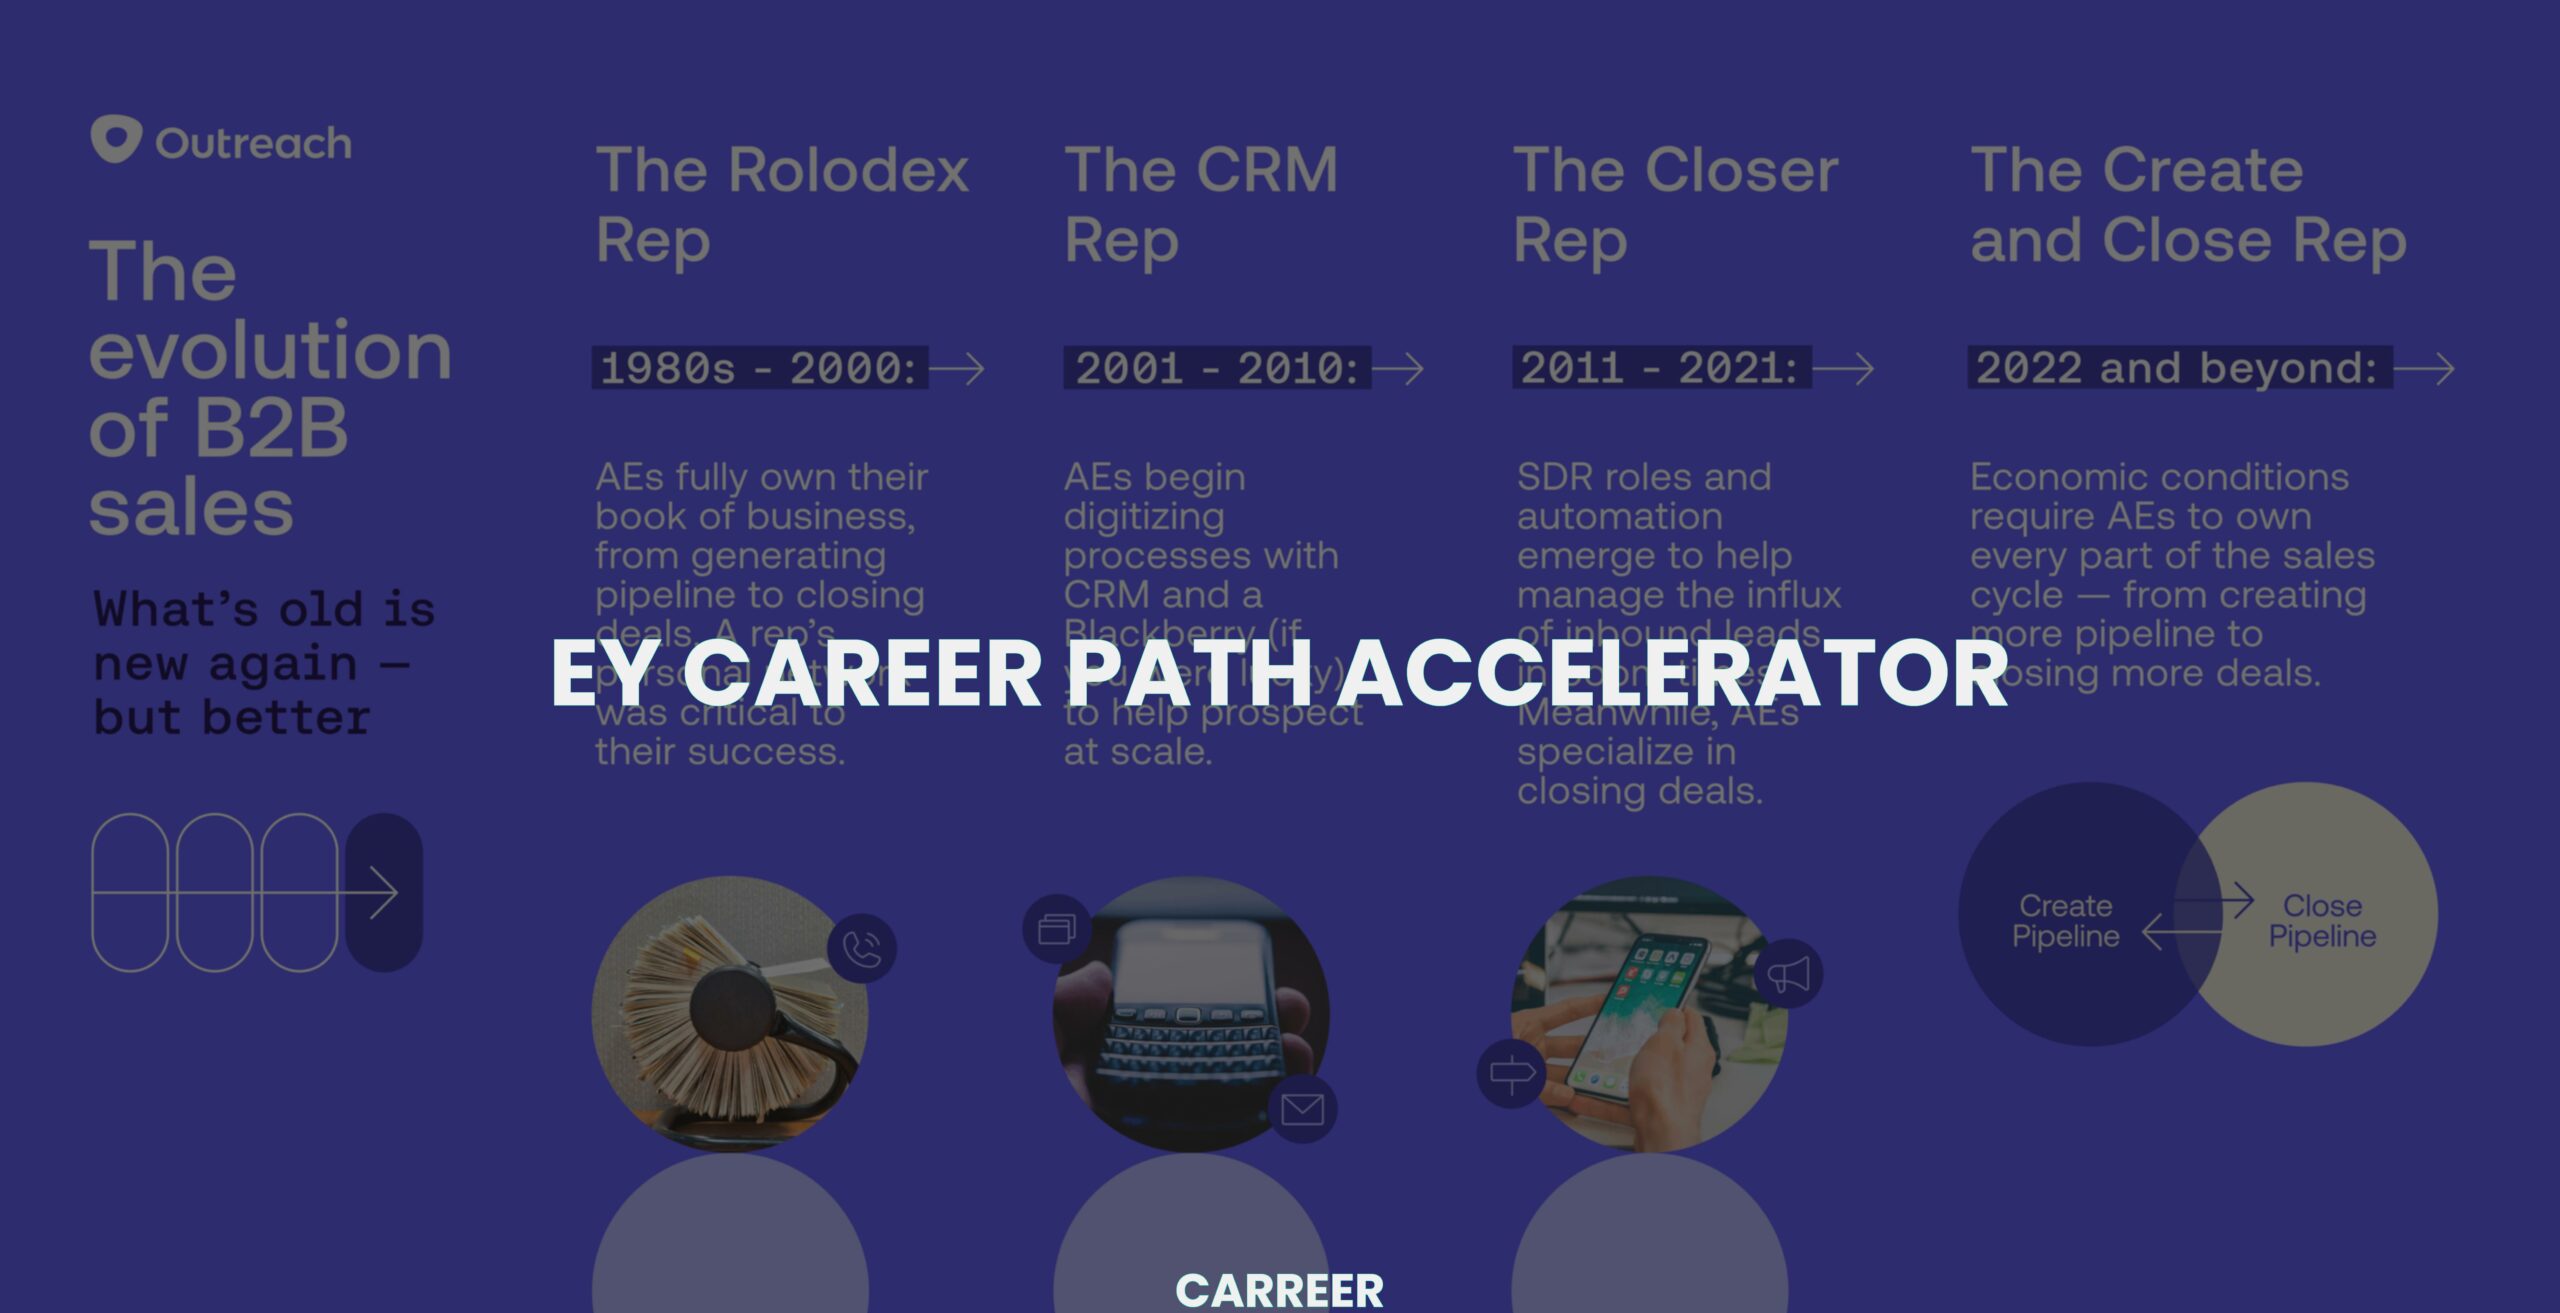 Ey career path accelerator